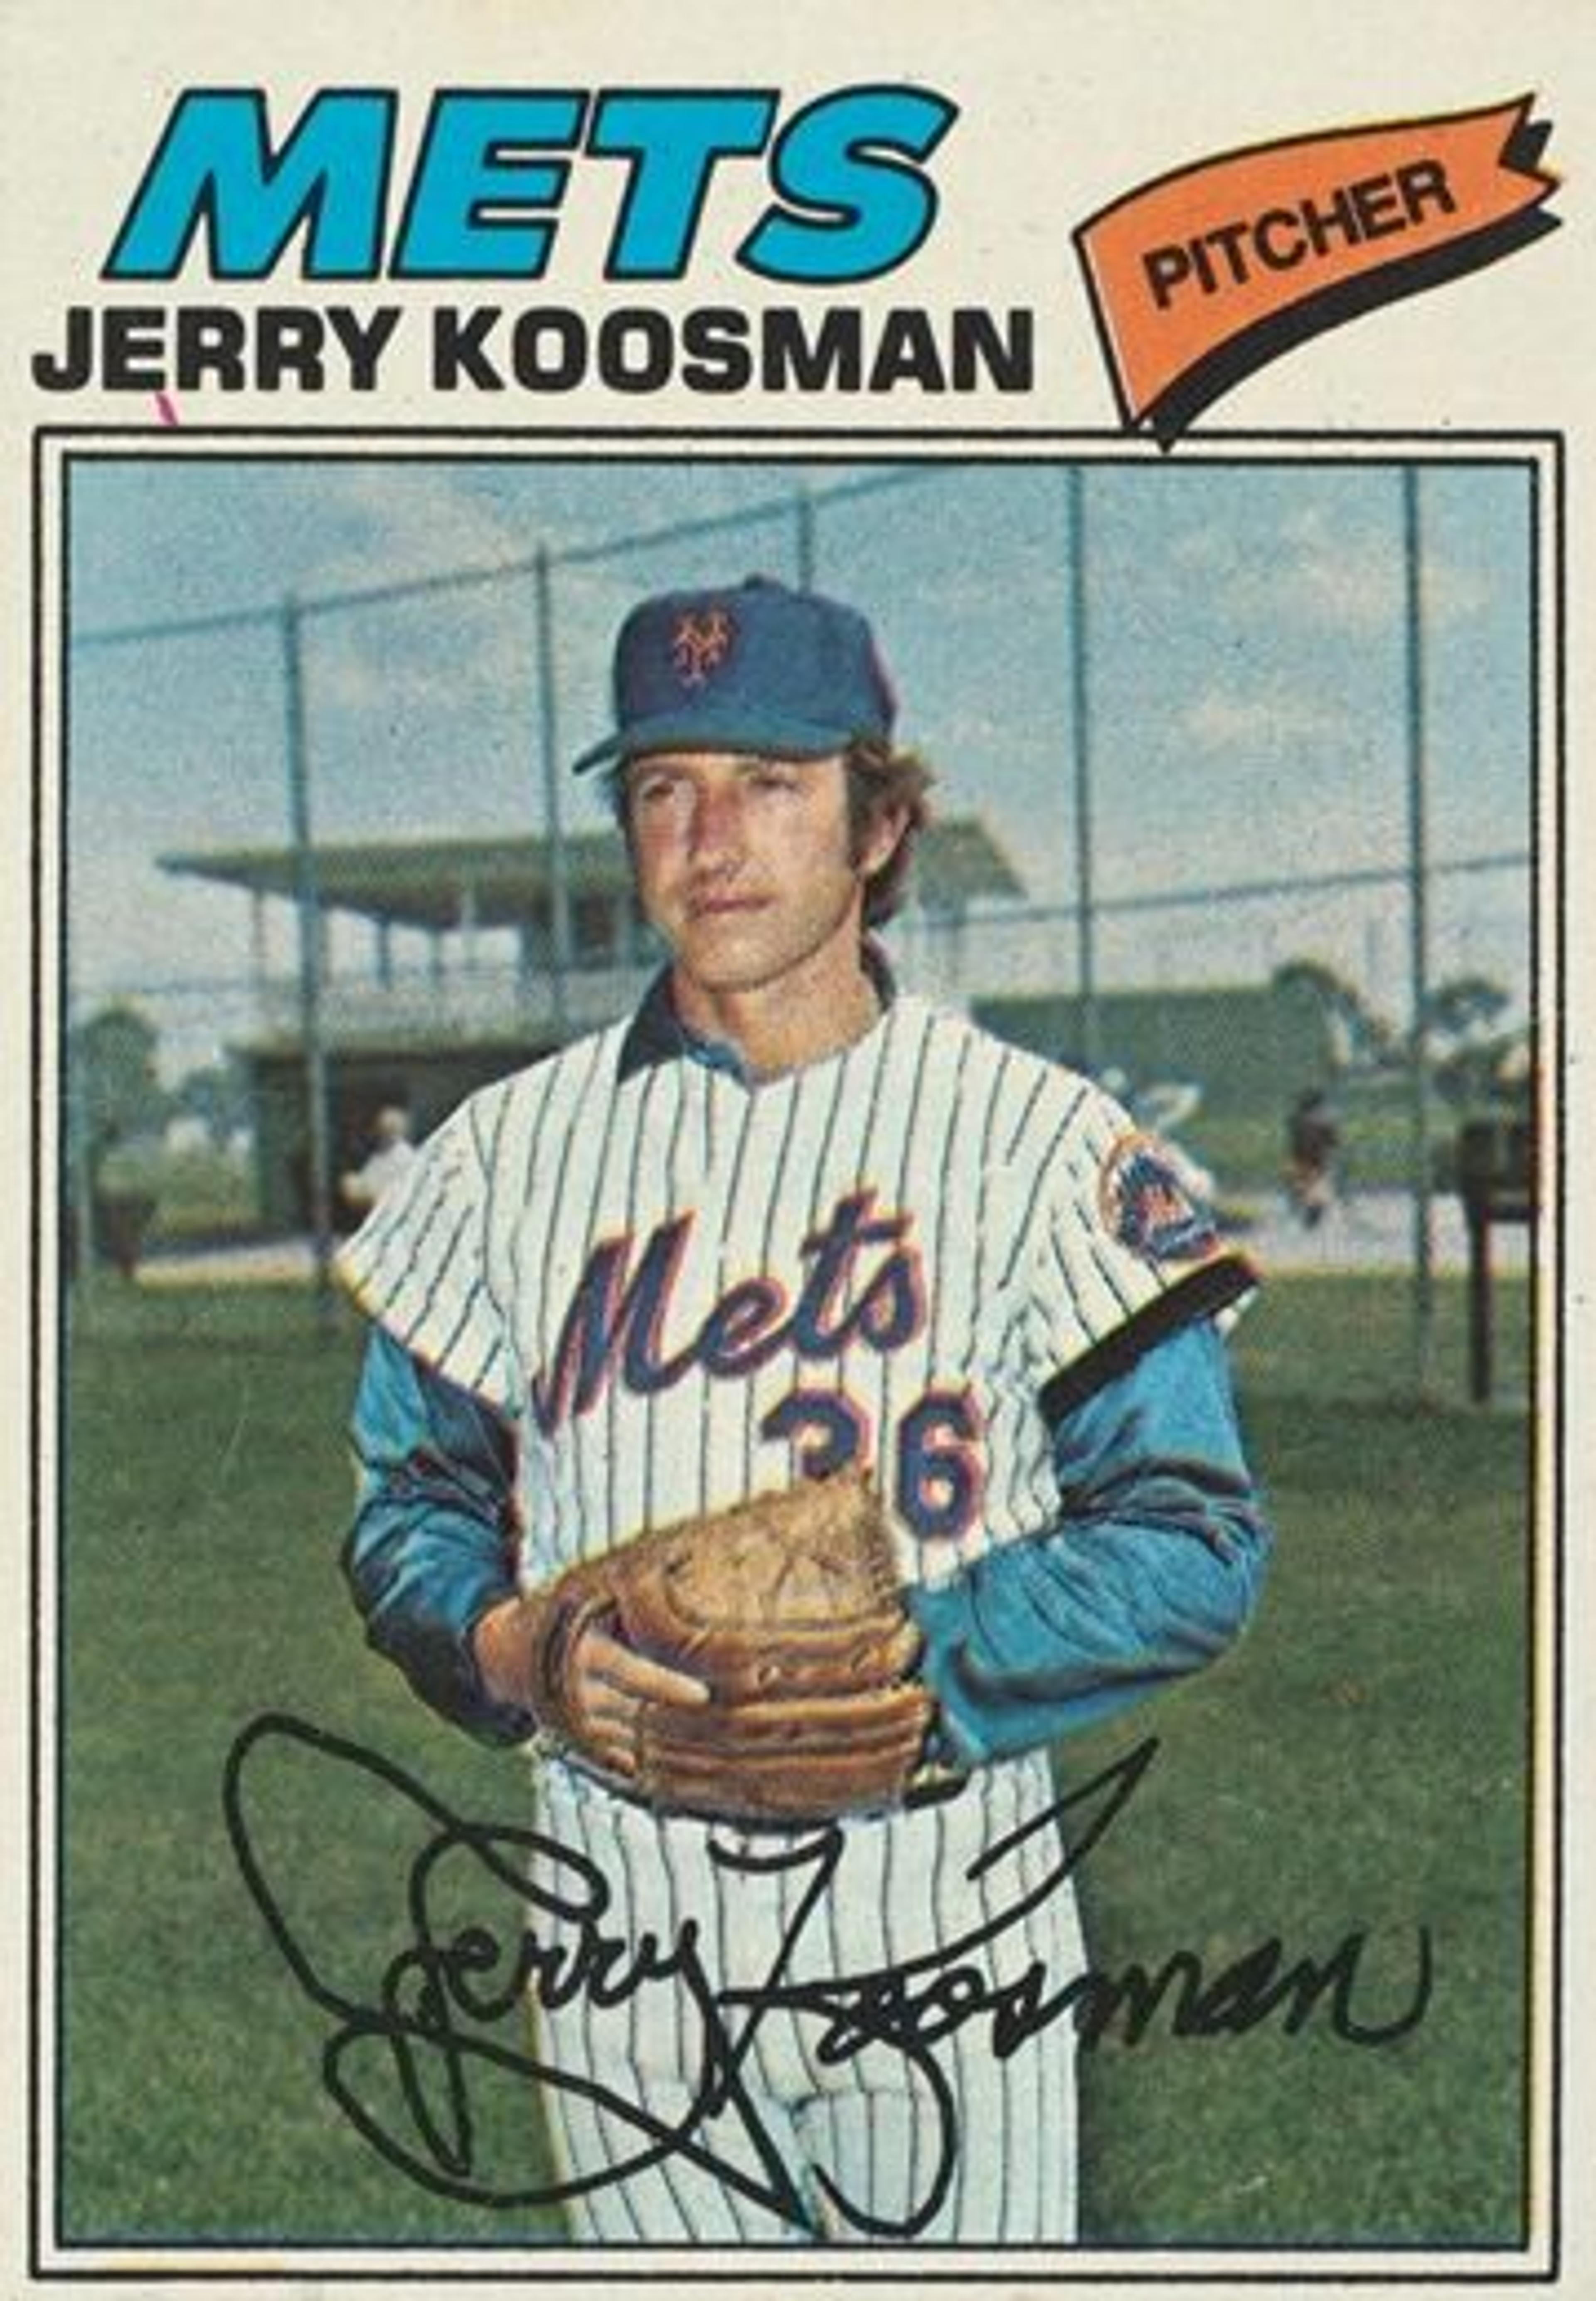 1977 baseball card featuring Jerry Koosman of the New York Mets